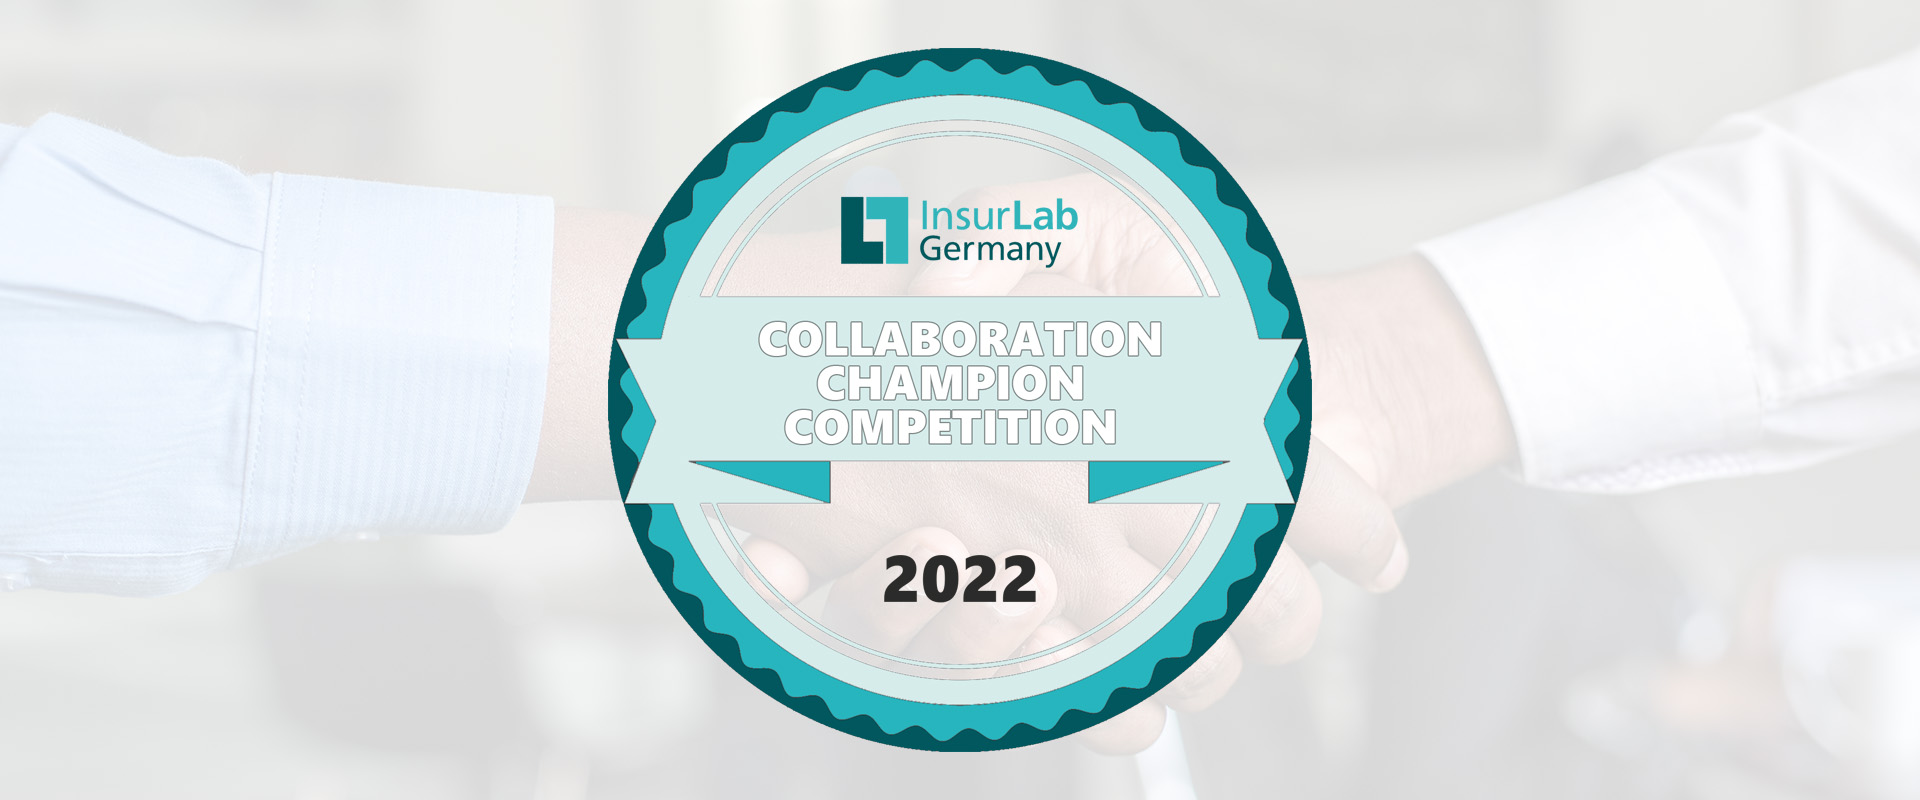 Collaboration Champion Competition 2022